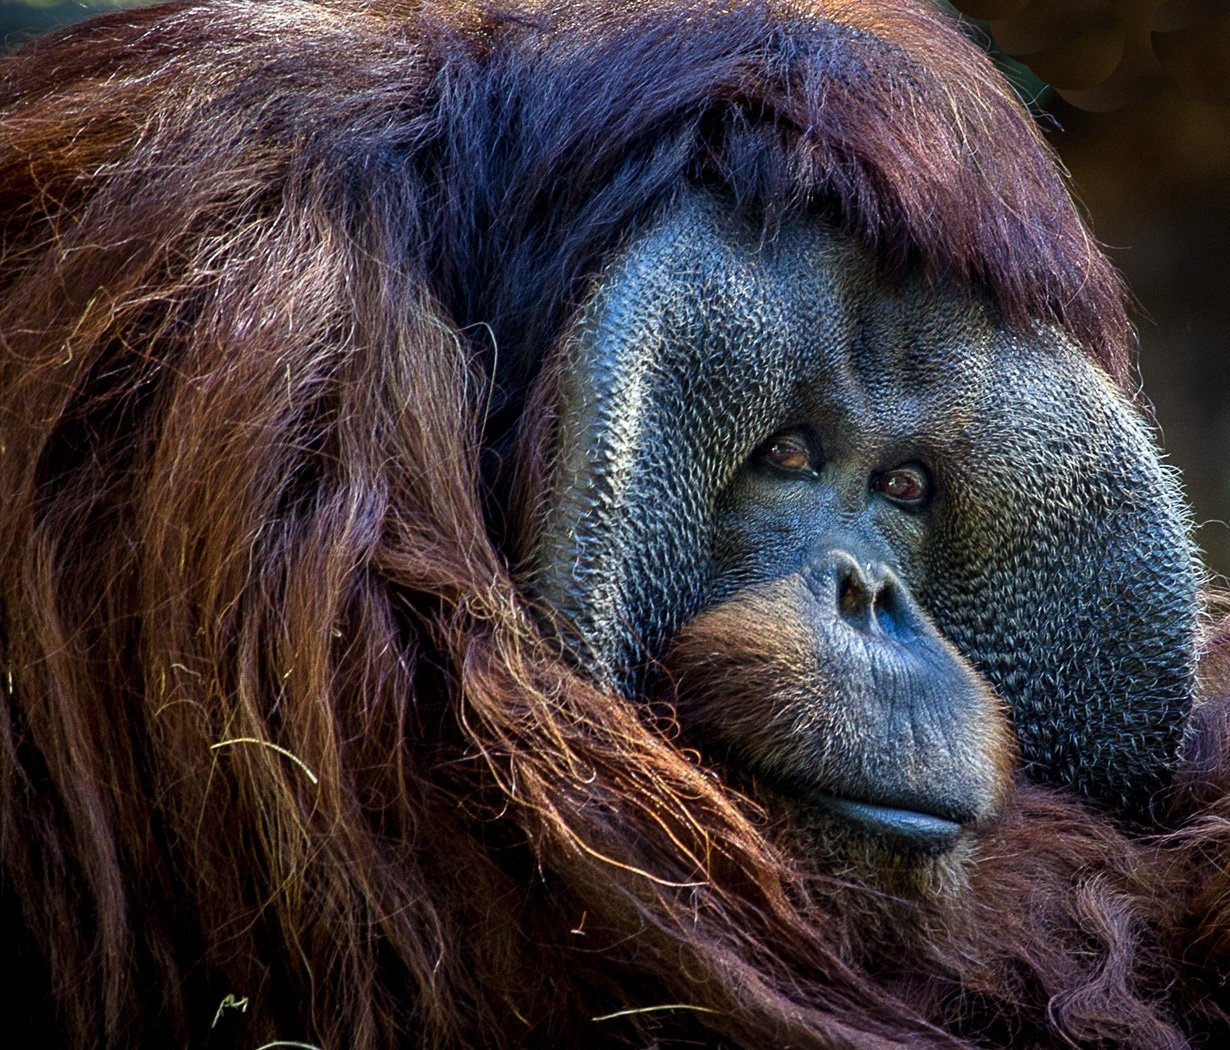 Orangutan, Buz Cabral, Houston Camera Club, 3rd Place